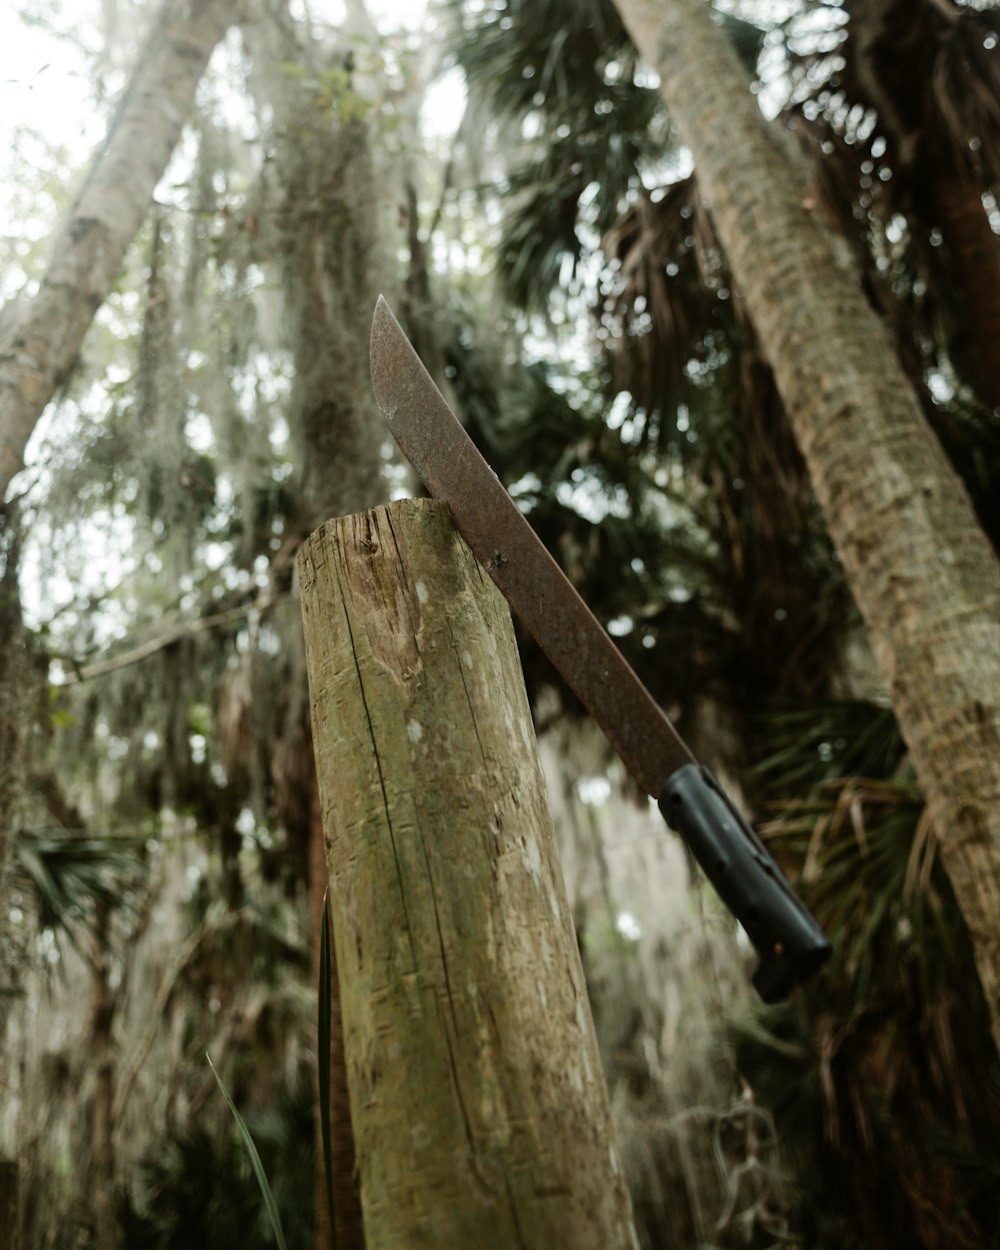 Un cuchillo clavado en un poste de madera en un bosque